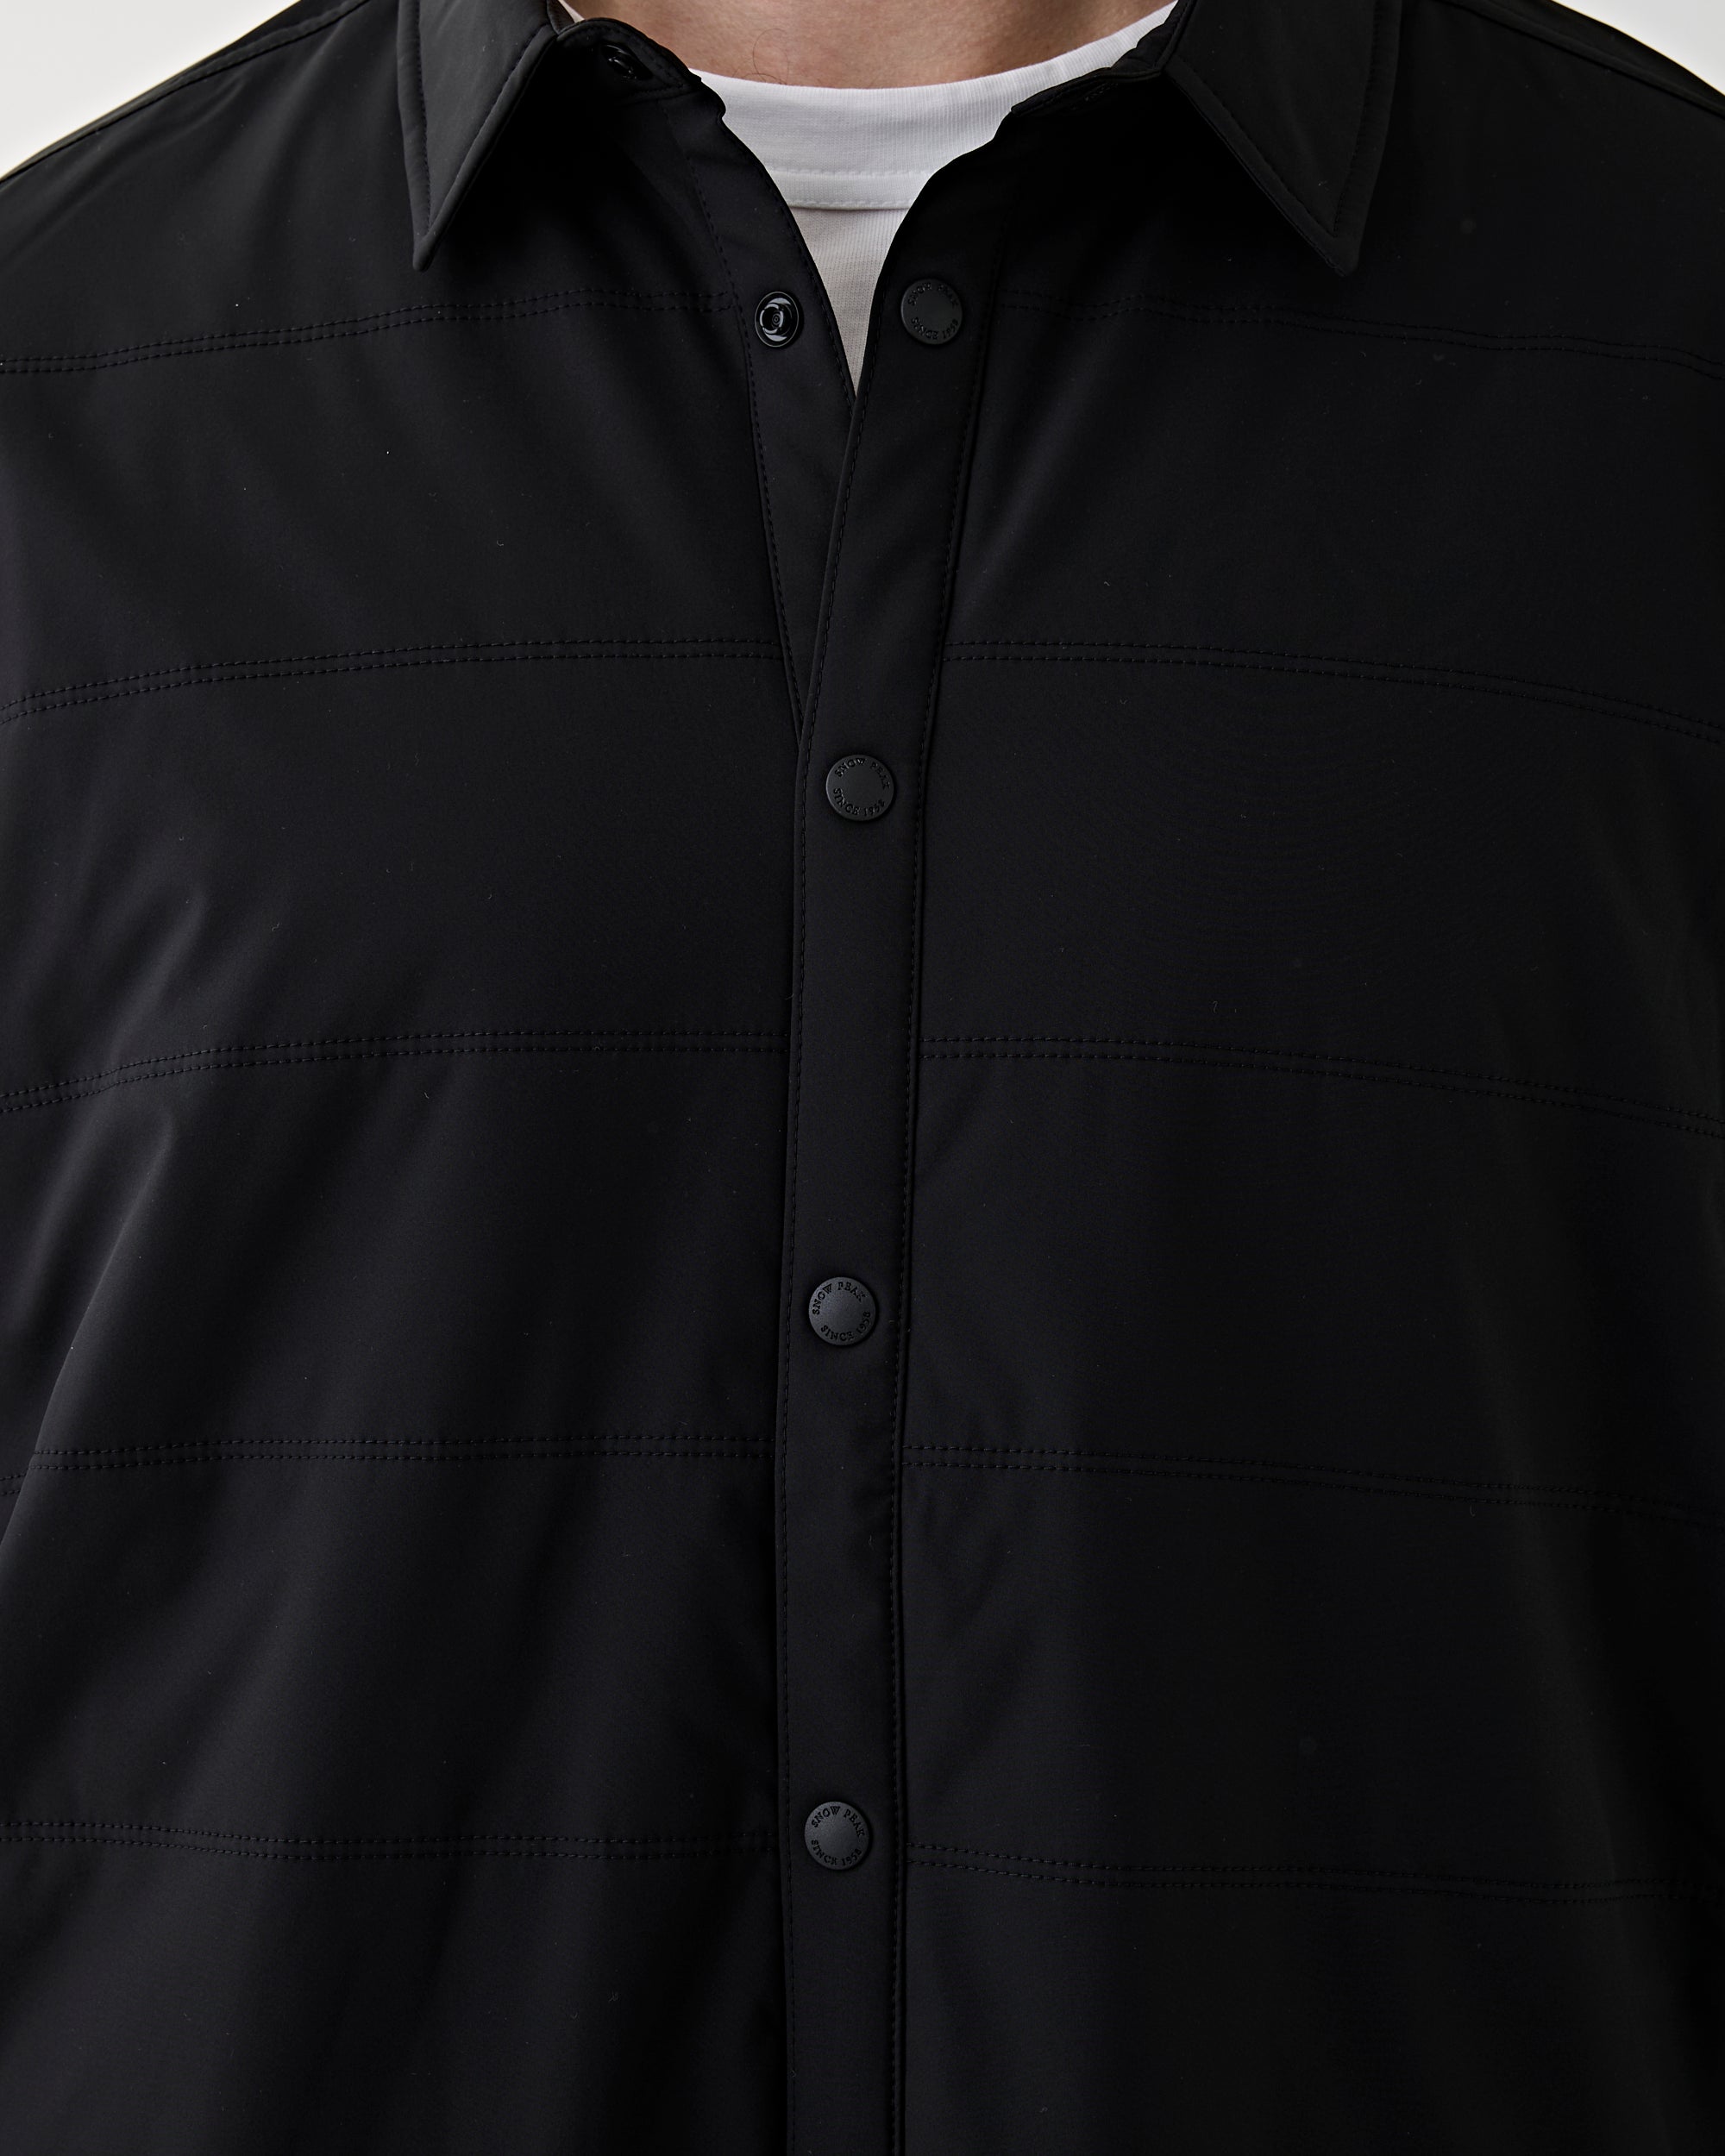 Snow Peak Flexible Insulated Shirt Black Shirt L/S Men